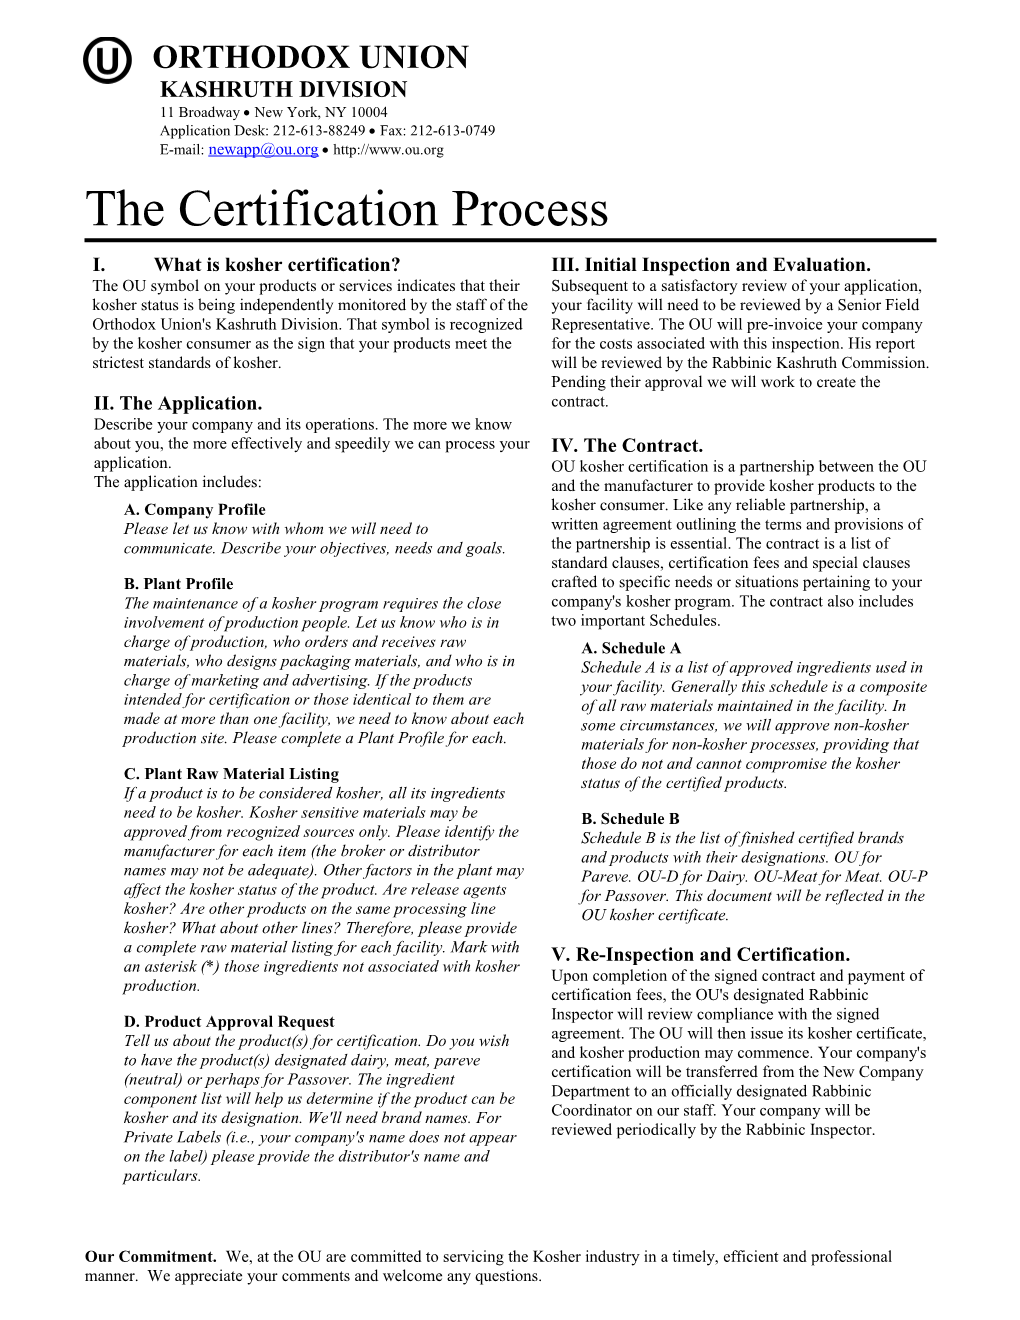 The Kosher Certification Flowchart